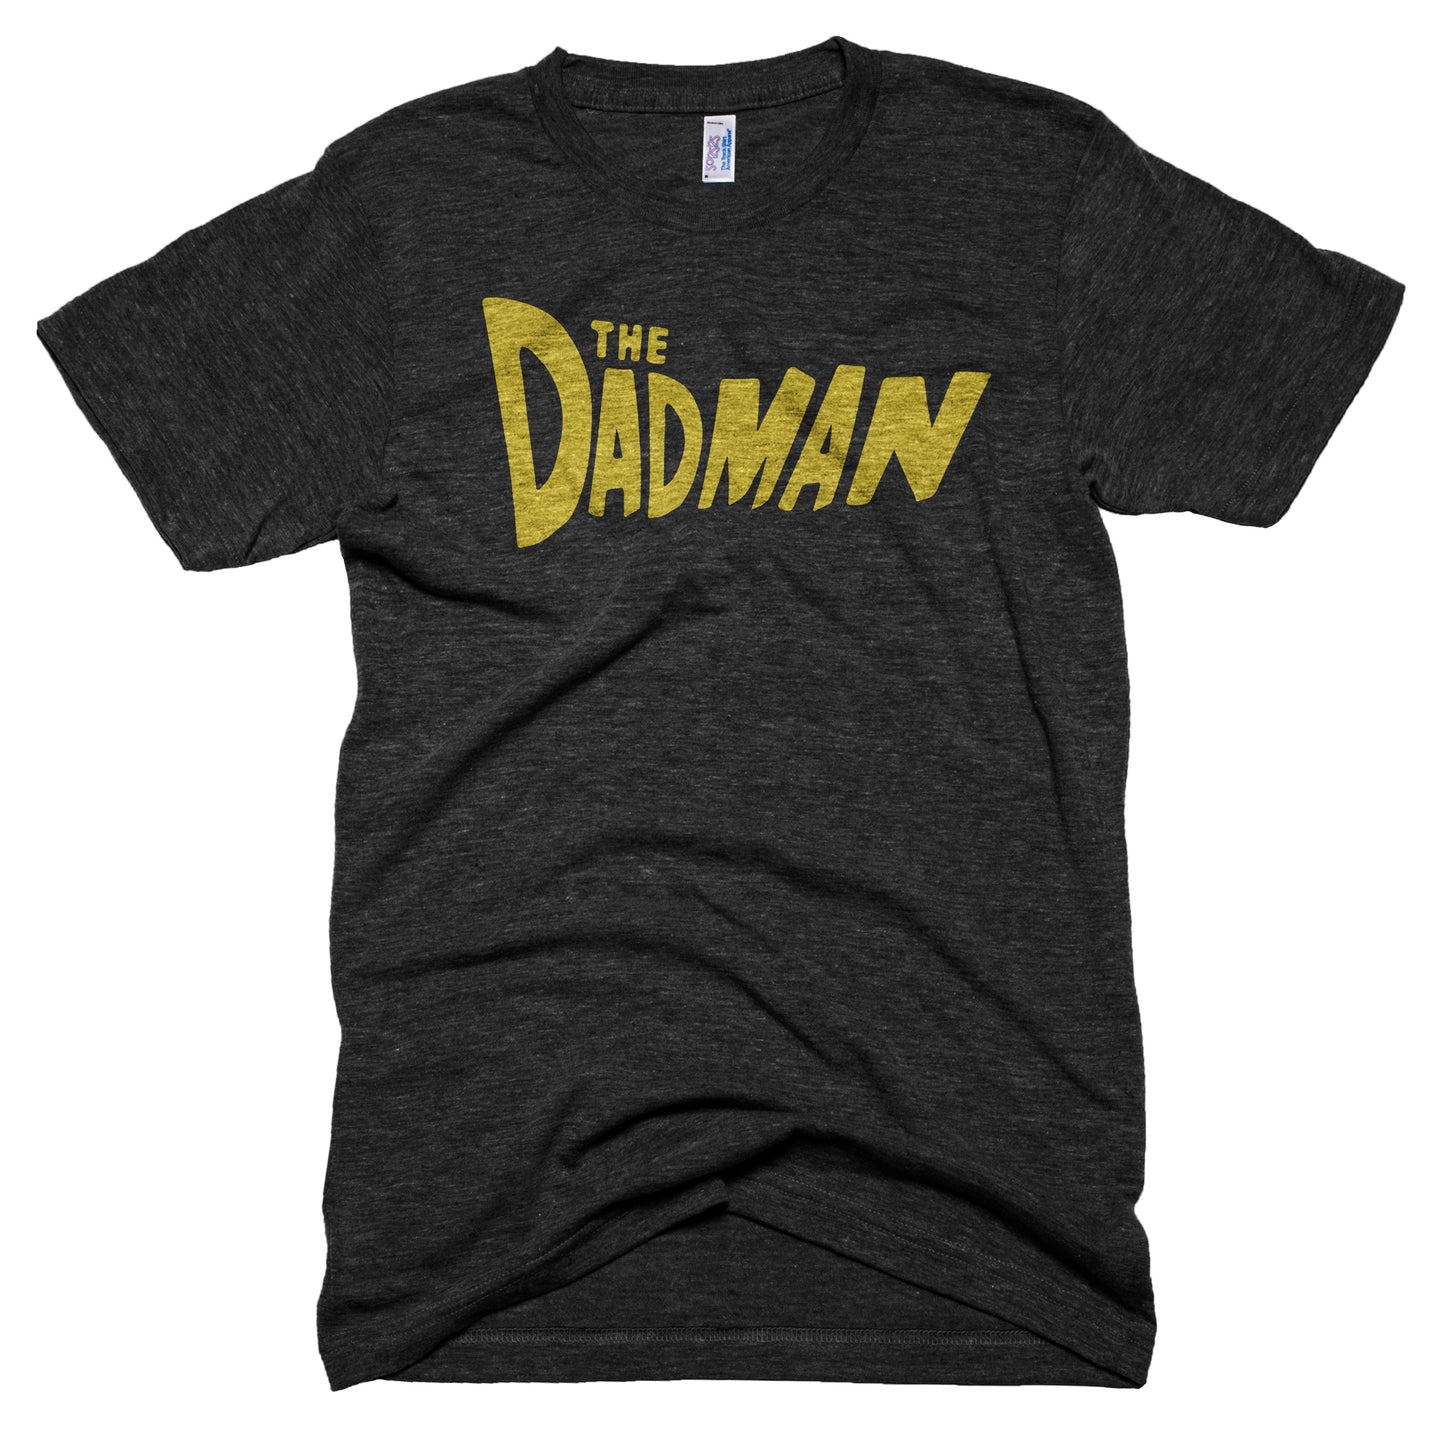 The Dadman T-shirt